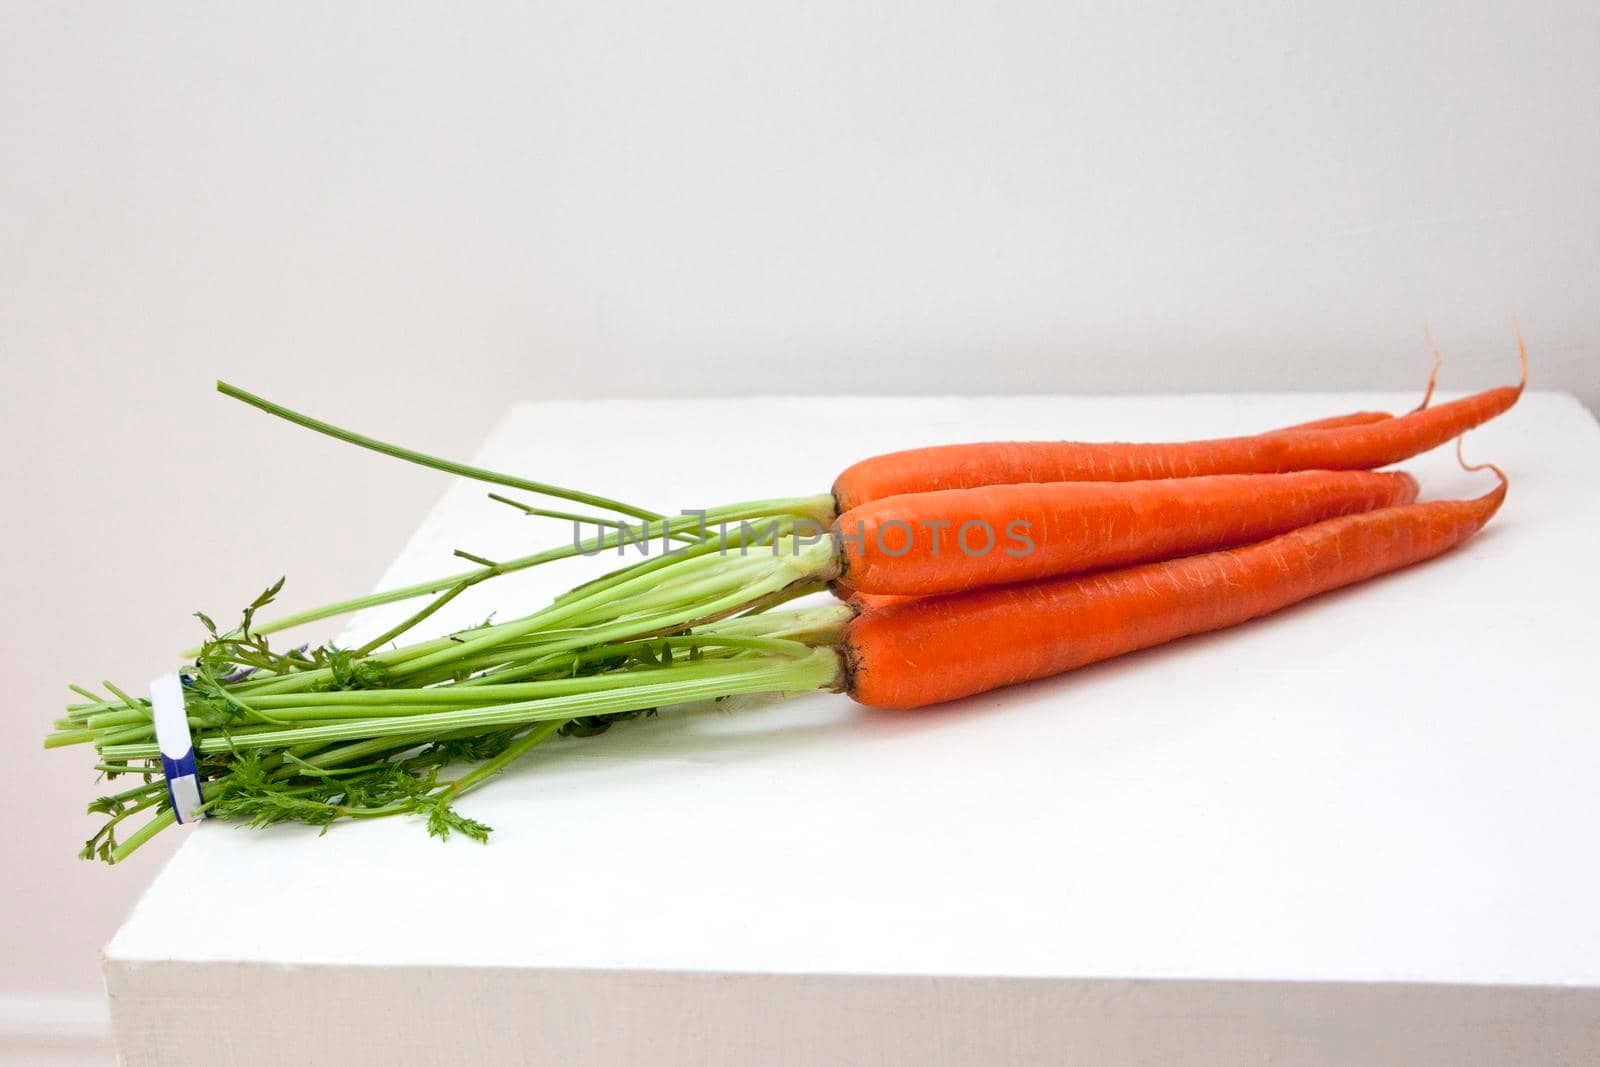  fresh bundle of orange carrots with green stalks